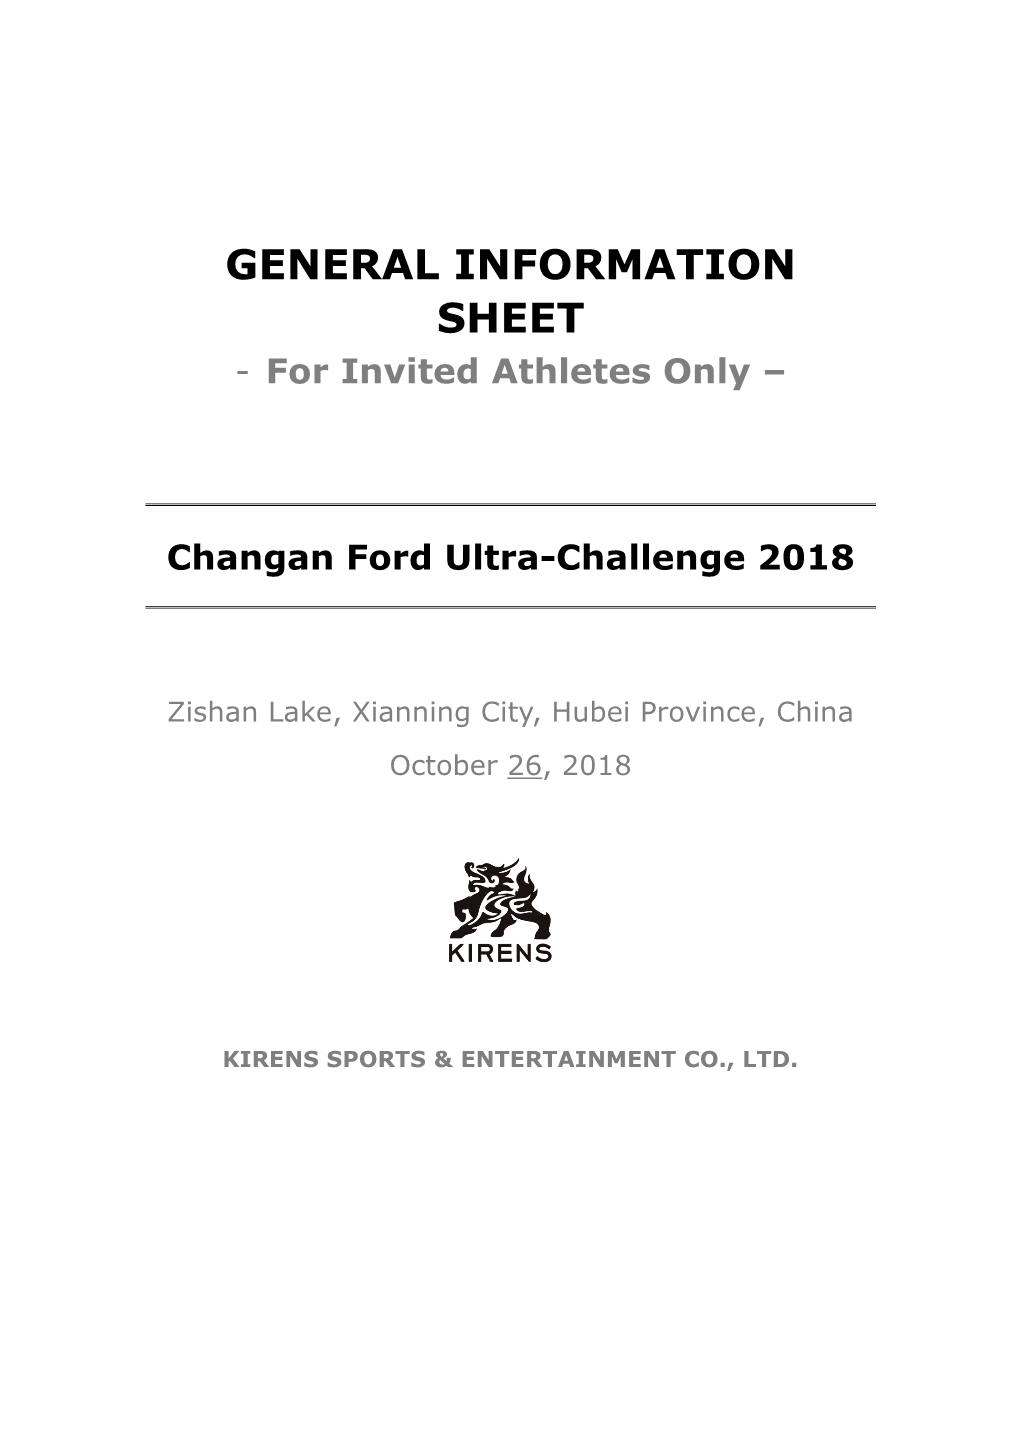 Changan Ford Ultra-Challenge 2018